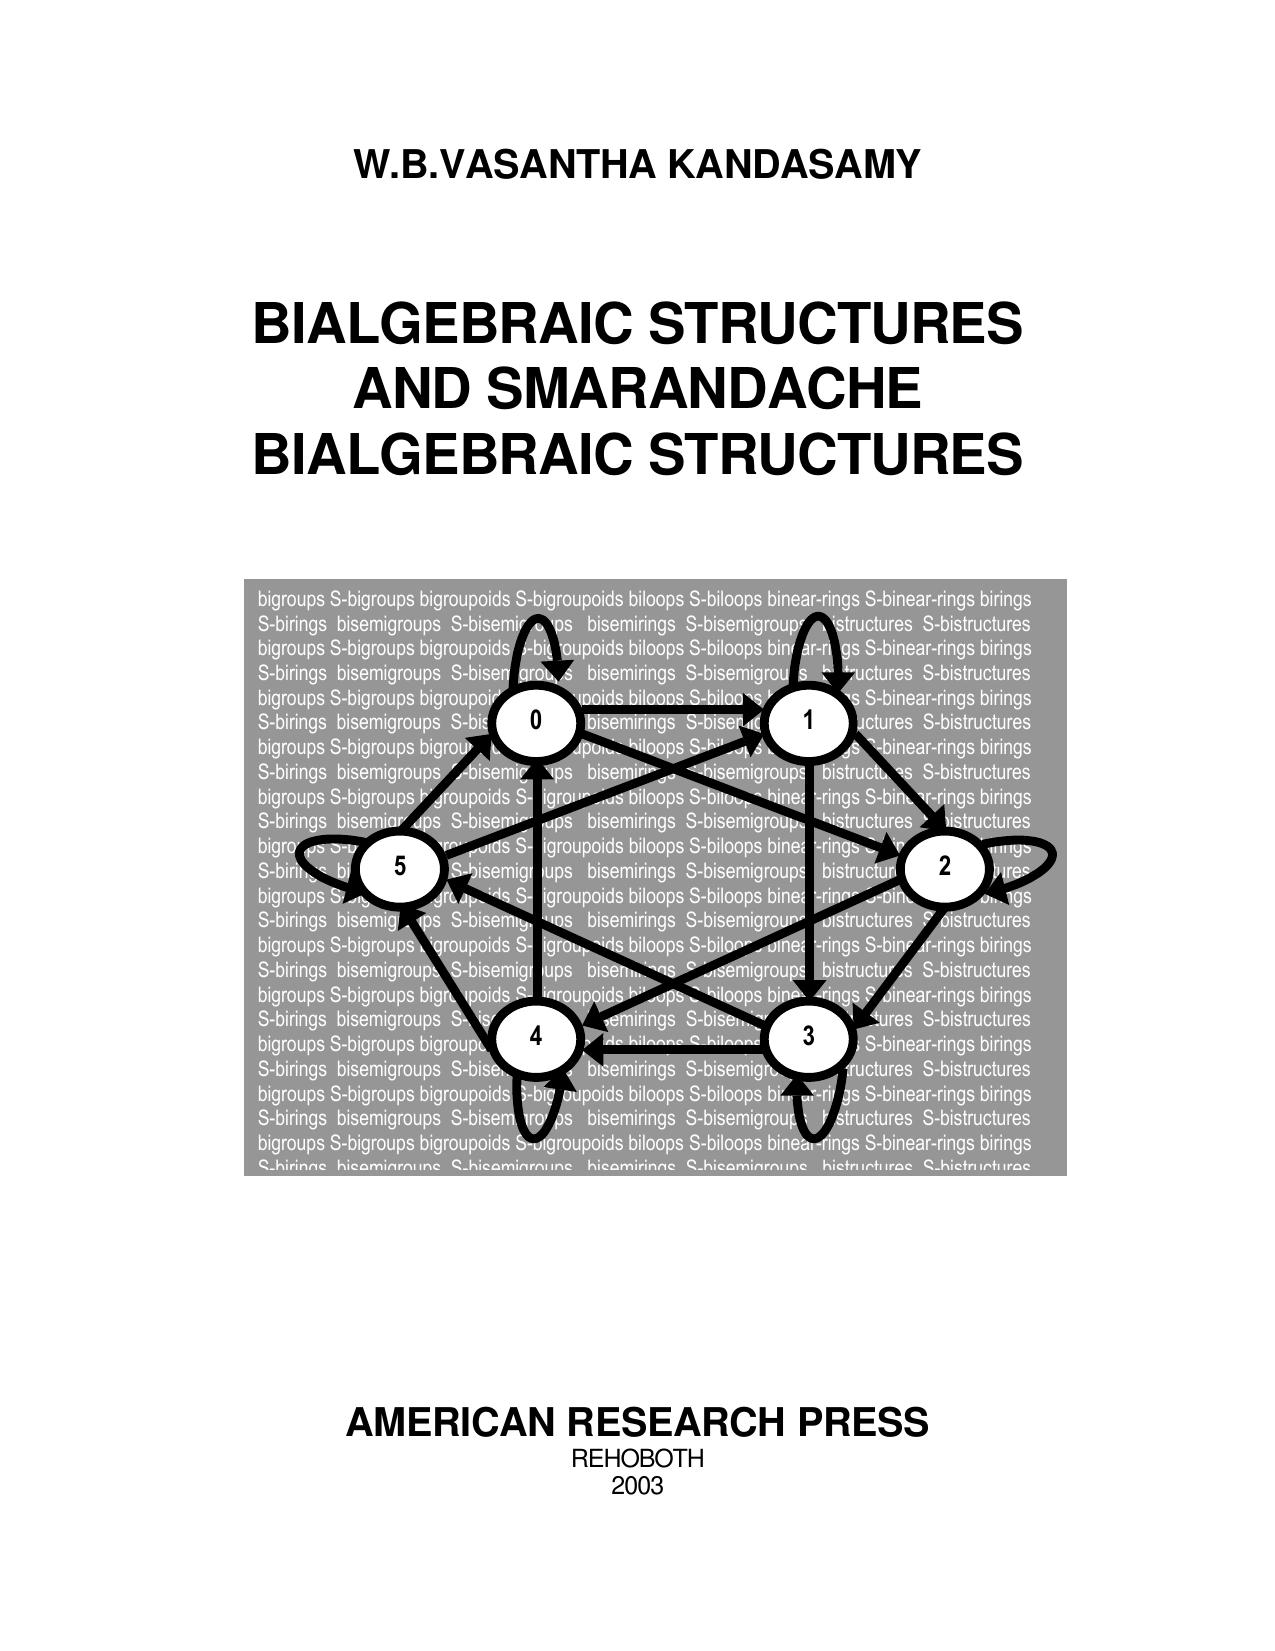 Bilagebraic Structures and Smarandache Bialgebraic Structures - Volume 8